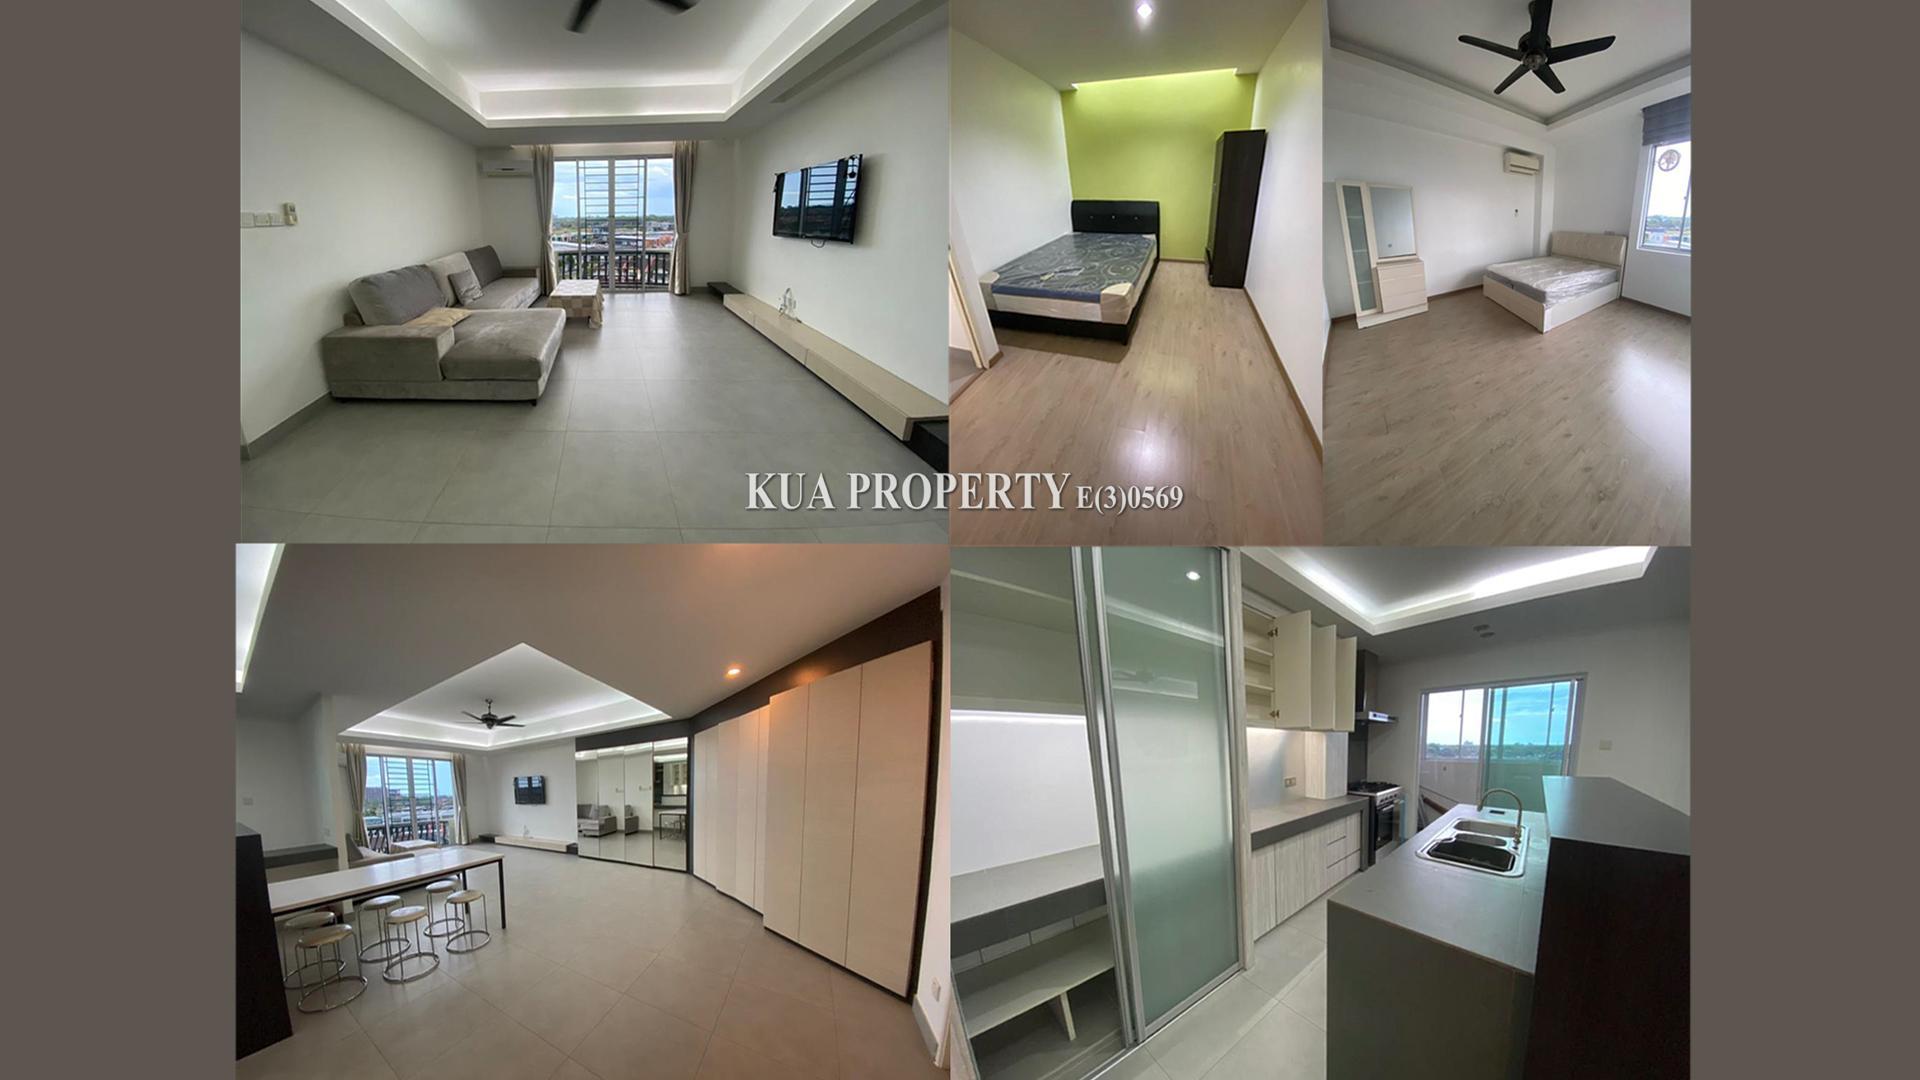 Floridale Condominium For Rent! Located at Jalan Wan Alwi, Opposite Vivacity